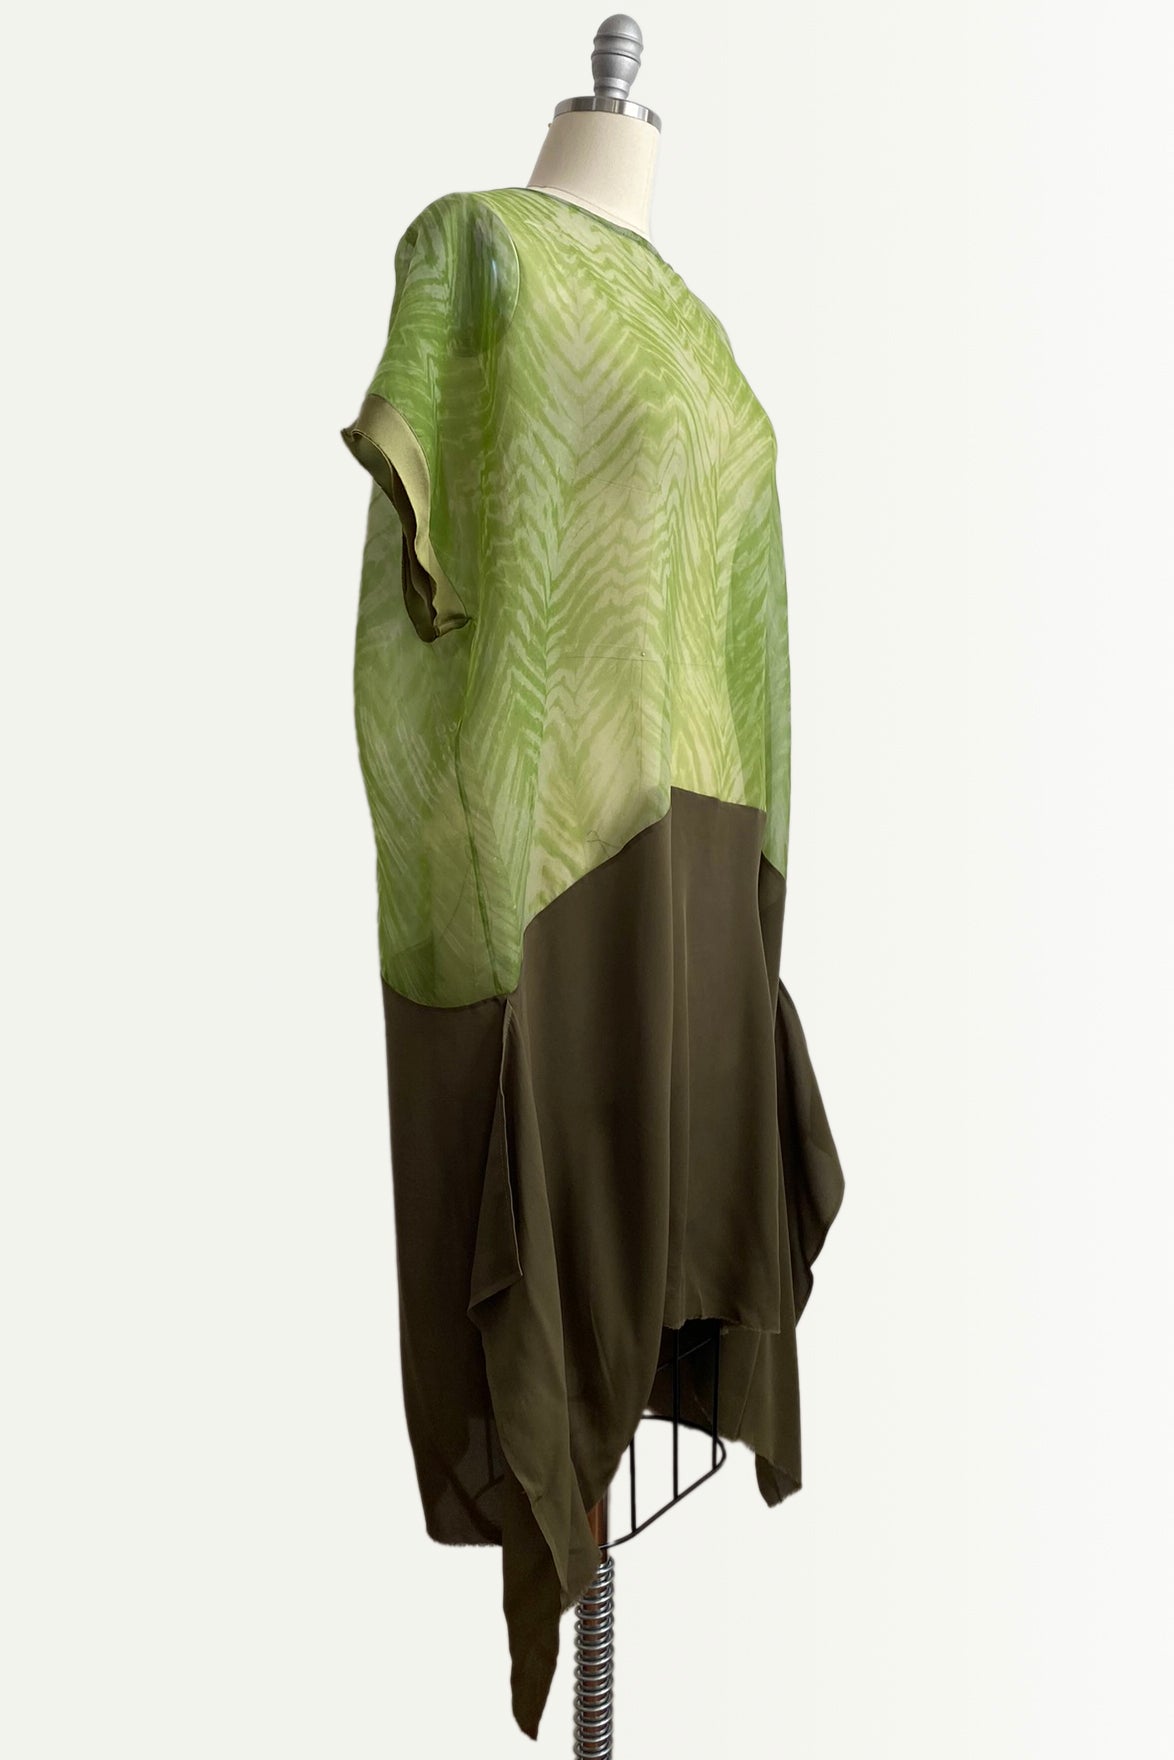 Essa Dress w/ Arashi Dye - Green - M/L